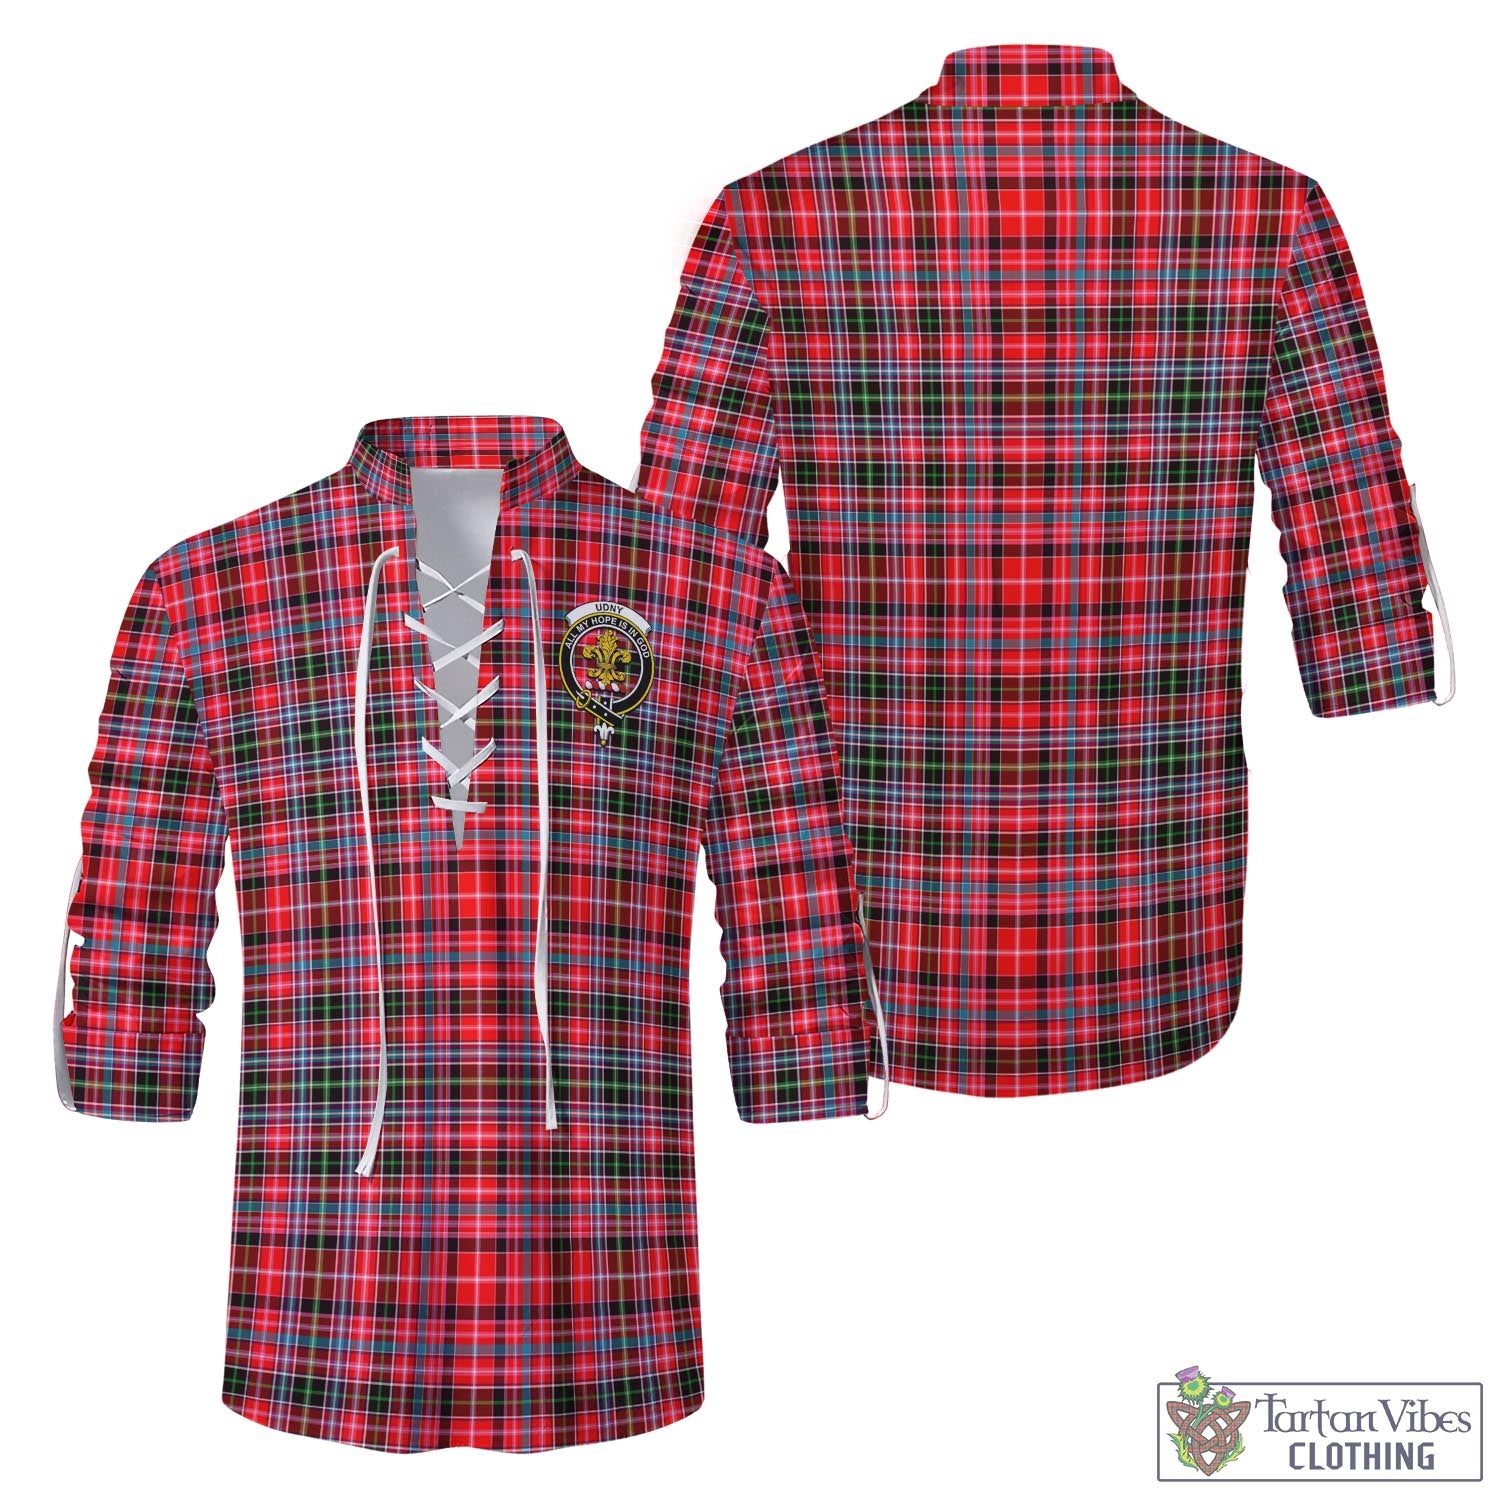 Tartan Vibes Clothing Udny Tartan Men's Scottish Traditional Jacobite Ghillie Kilt Shirt with Family Crest